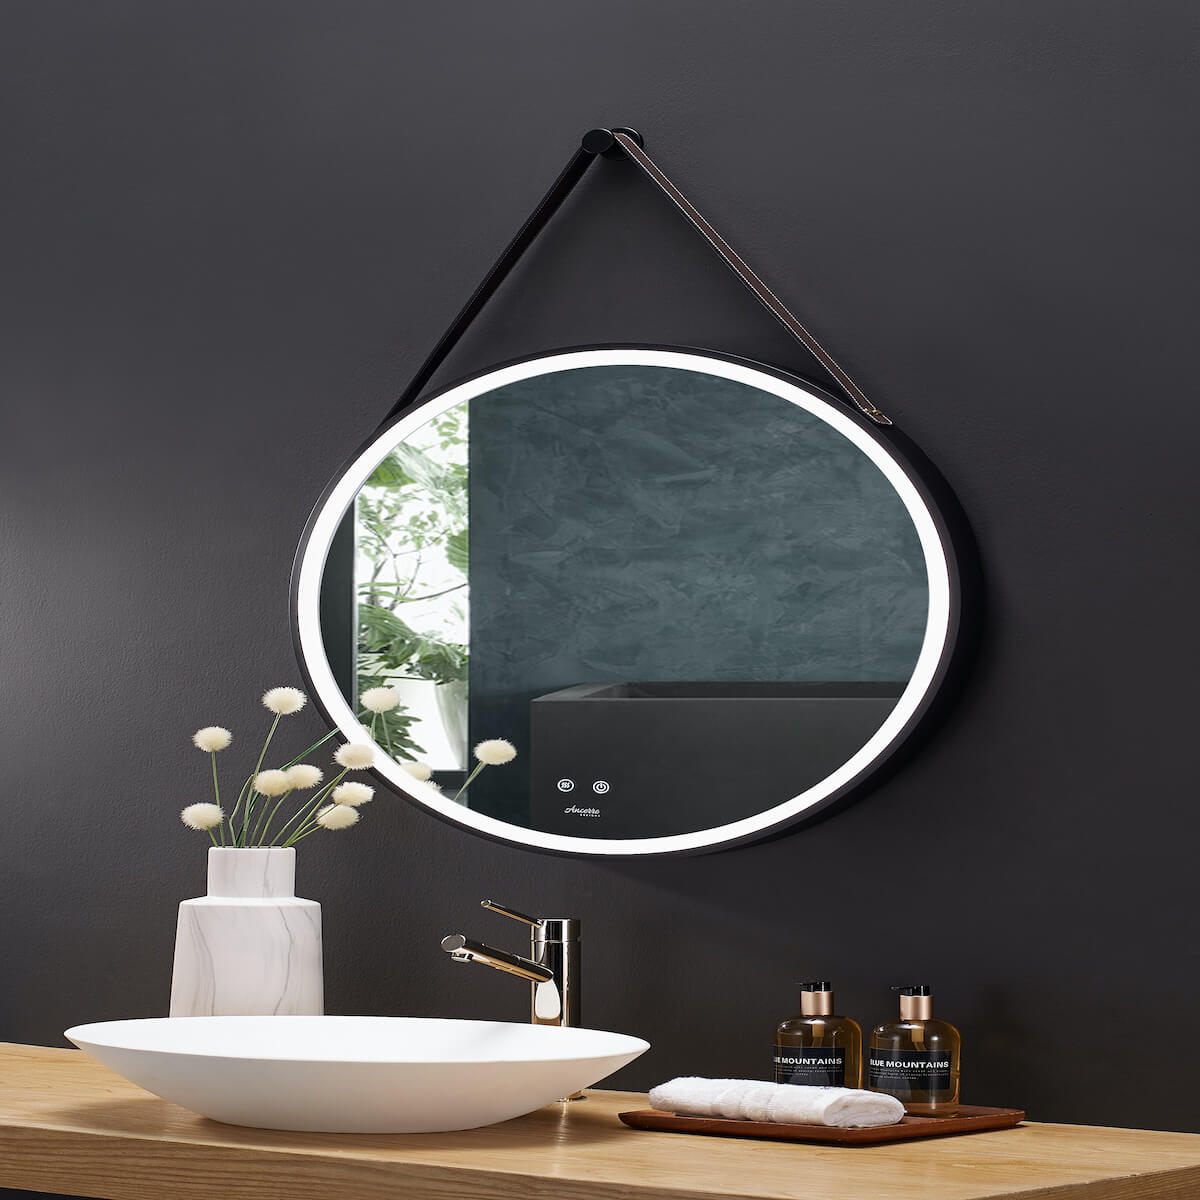 Ancerre Designs 24" LED Sangle Mirror LEDM-SANGLE-24-B Angle